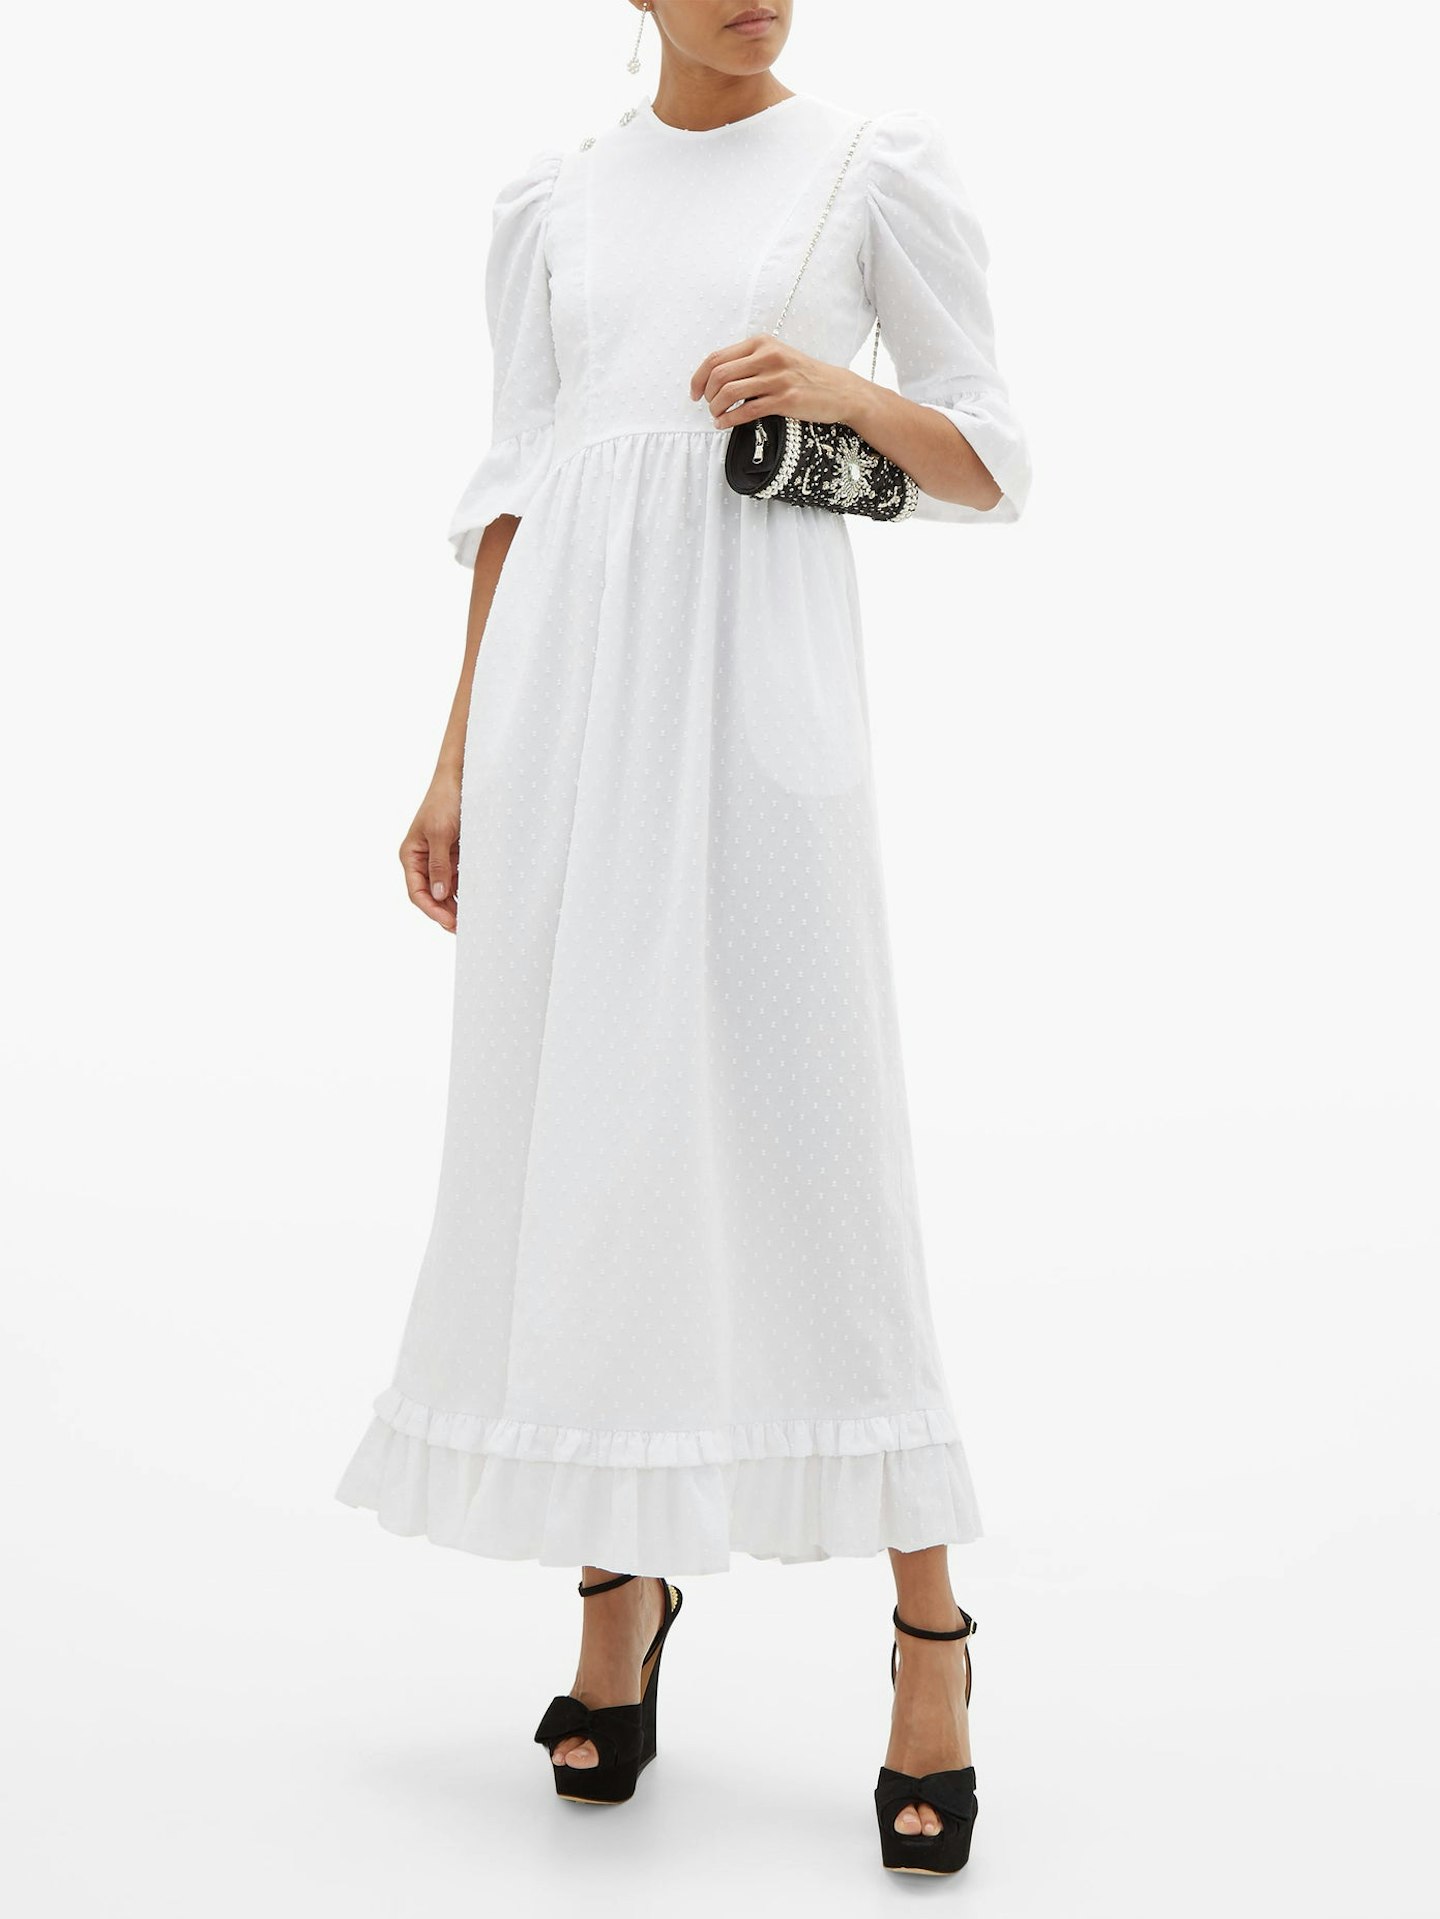 Batsheva, Ruffled Cotton Dress, £415